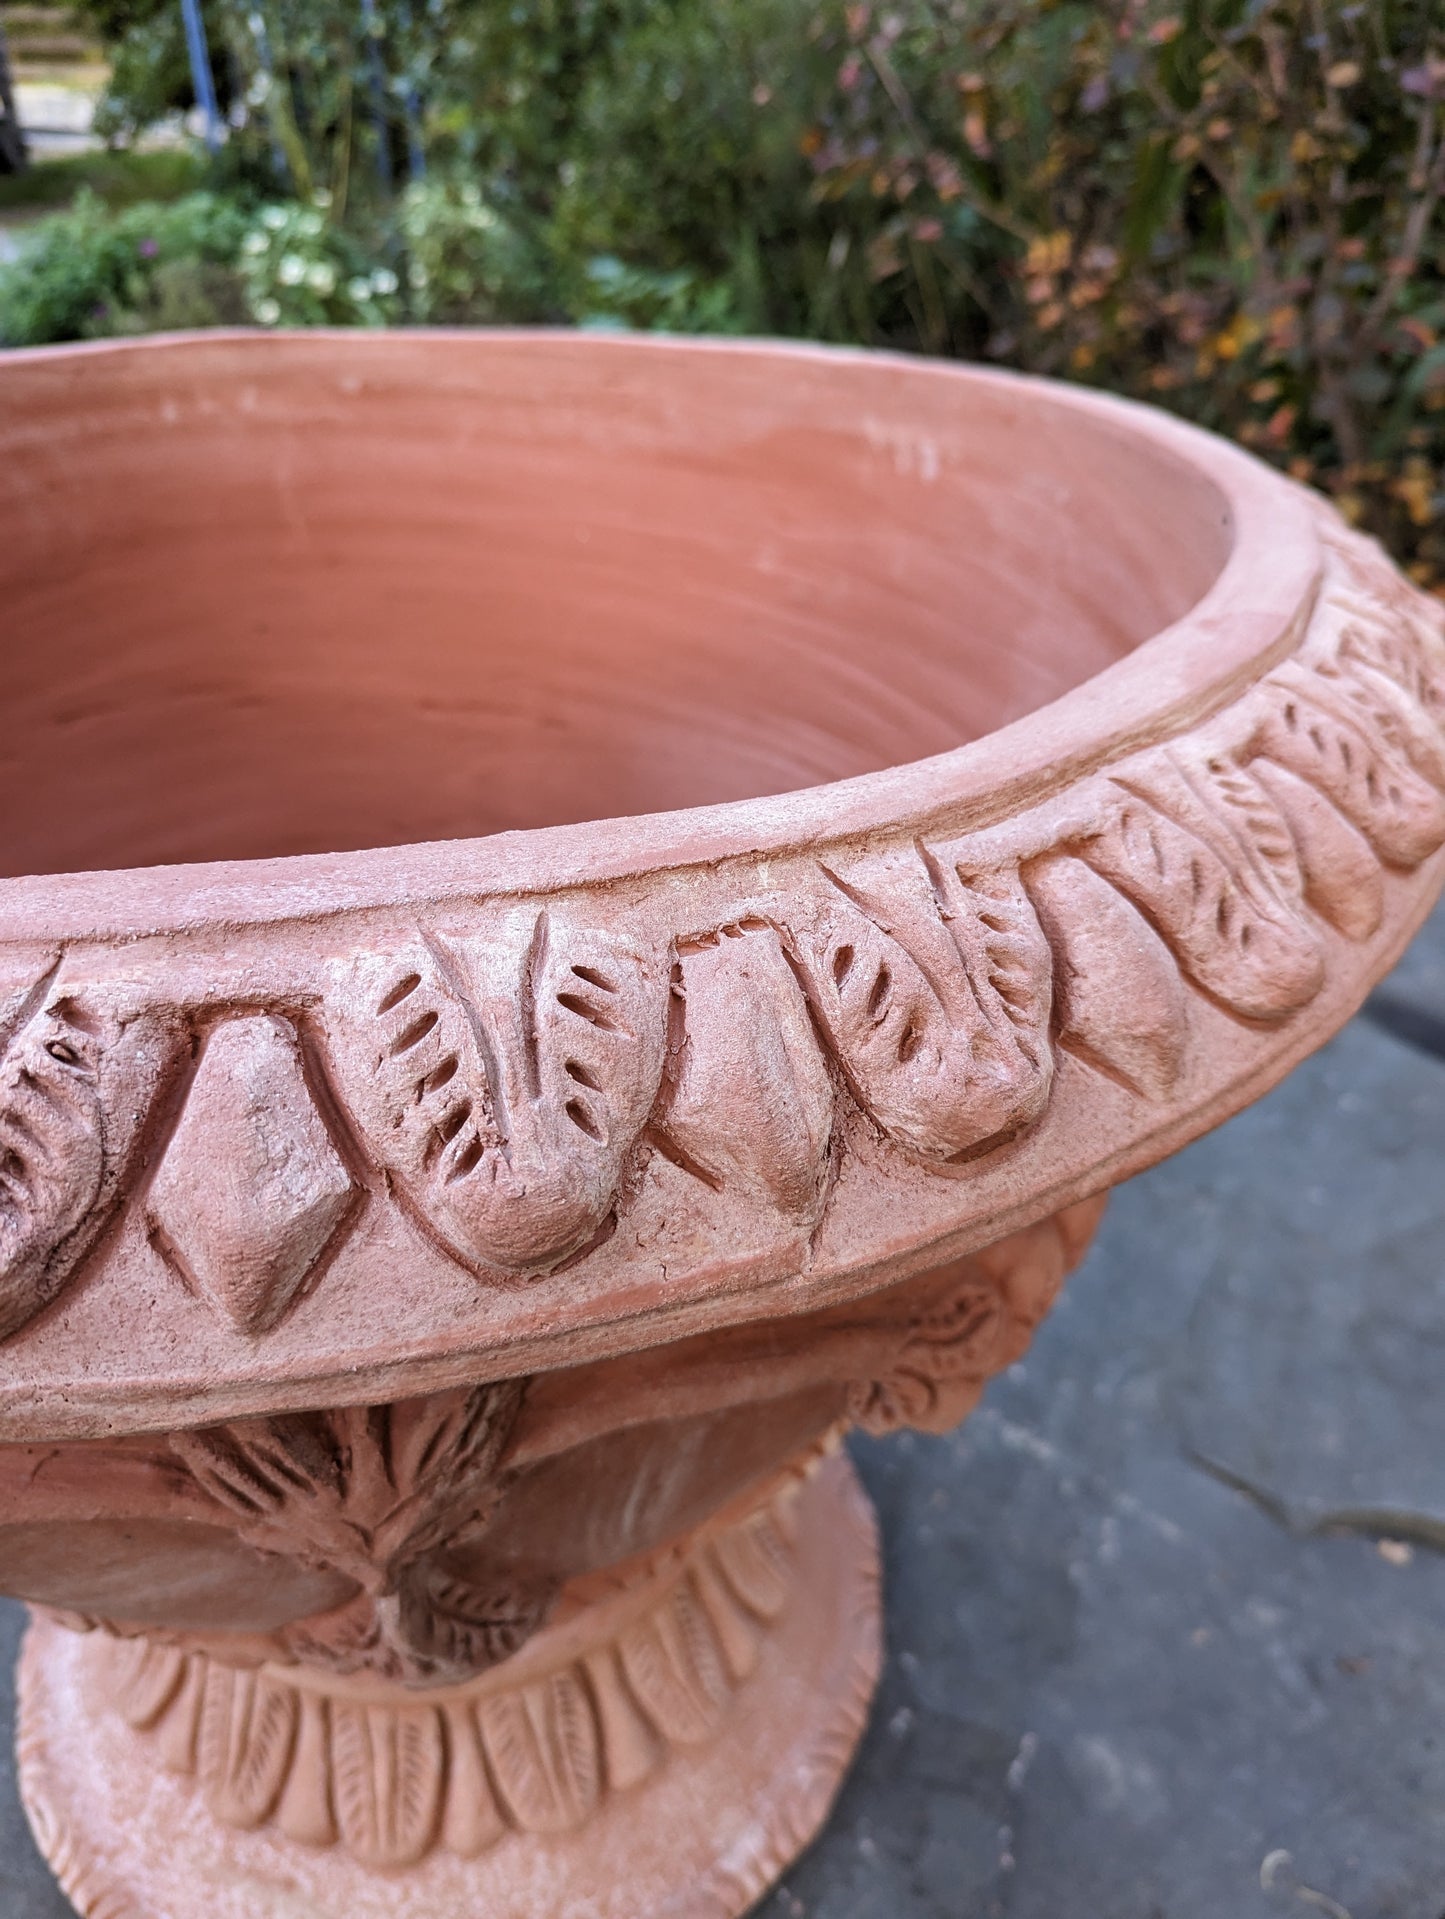 Italian "Fontana" Terracotta Pot with Base (65cm)